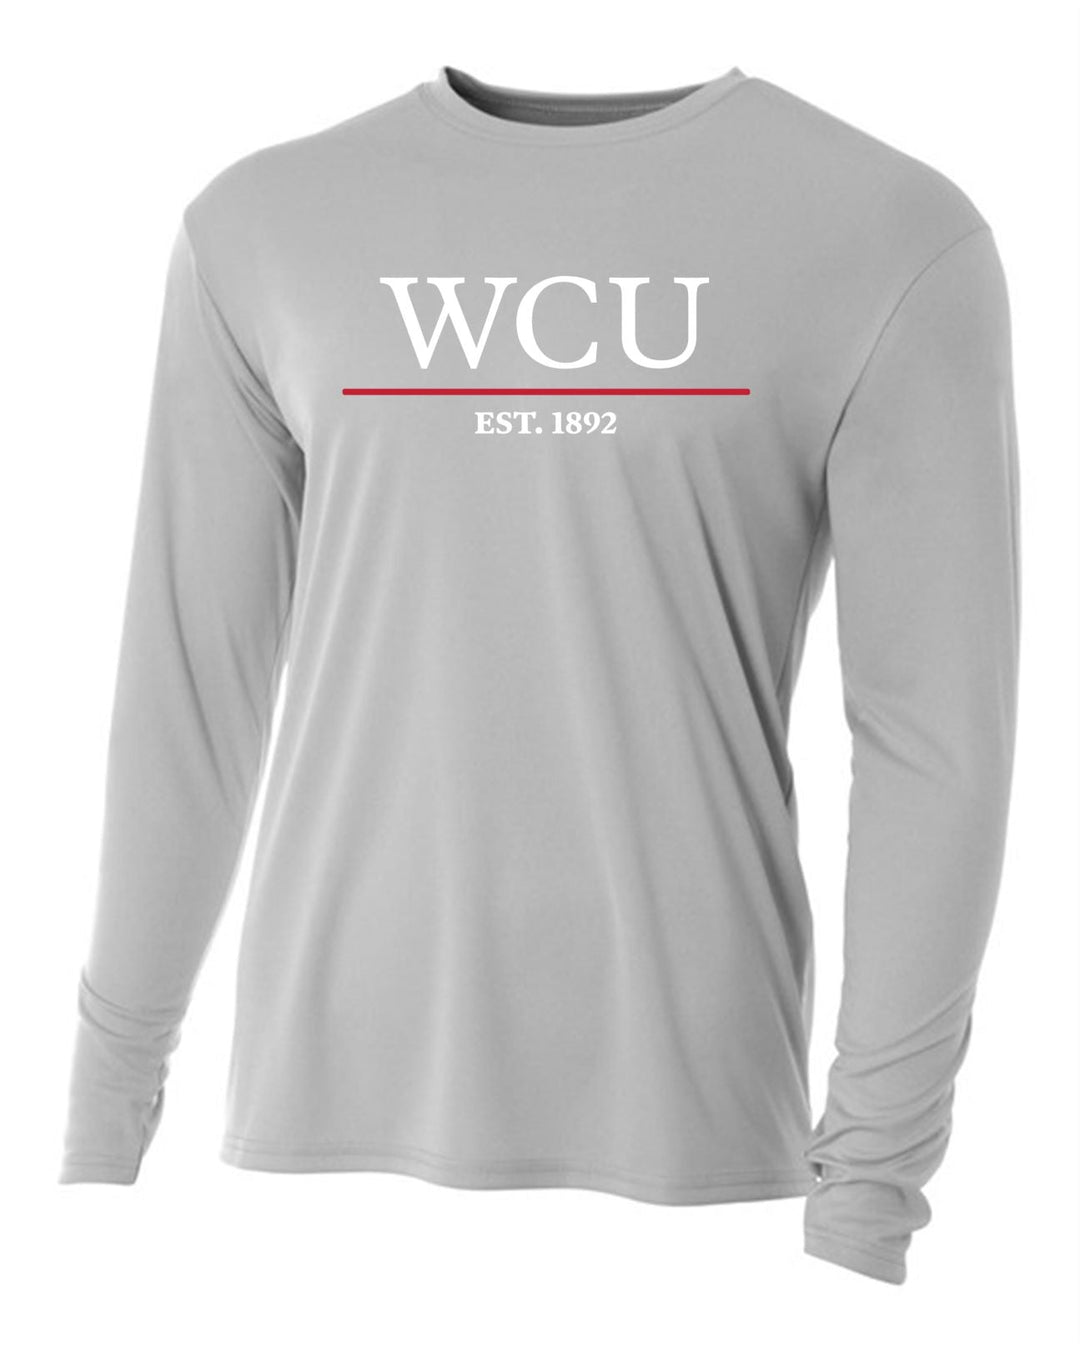 WCU Baton Rouge Youth Long-Sleeve Performance Shirt WCU BR Silver Grey Youth Small - Third Coast Soccer